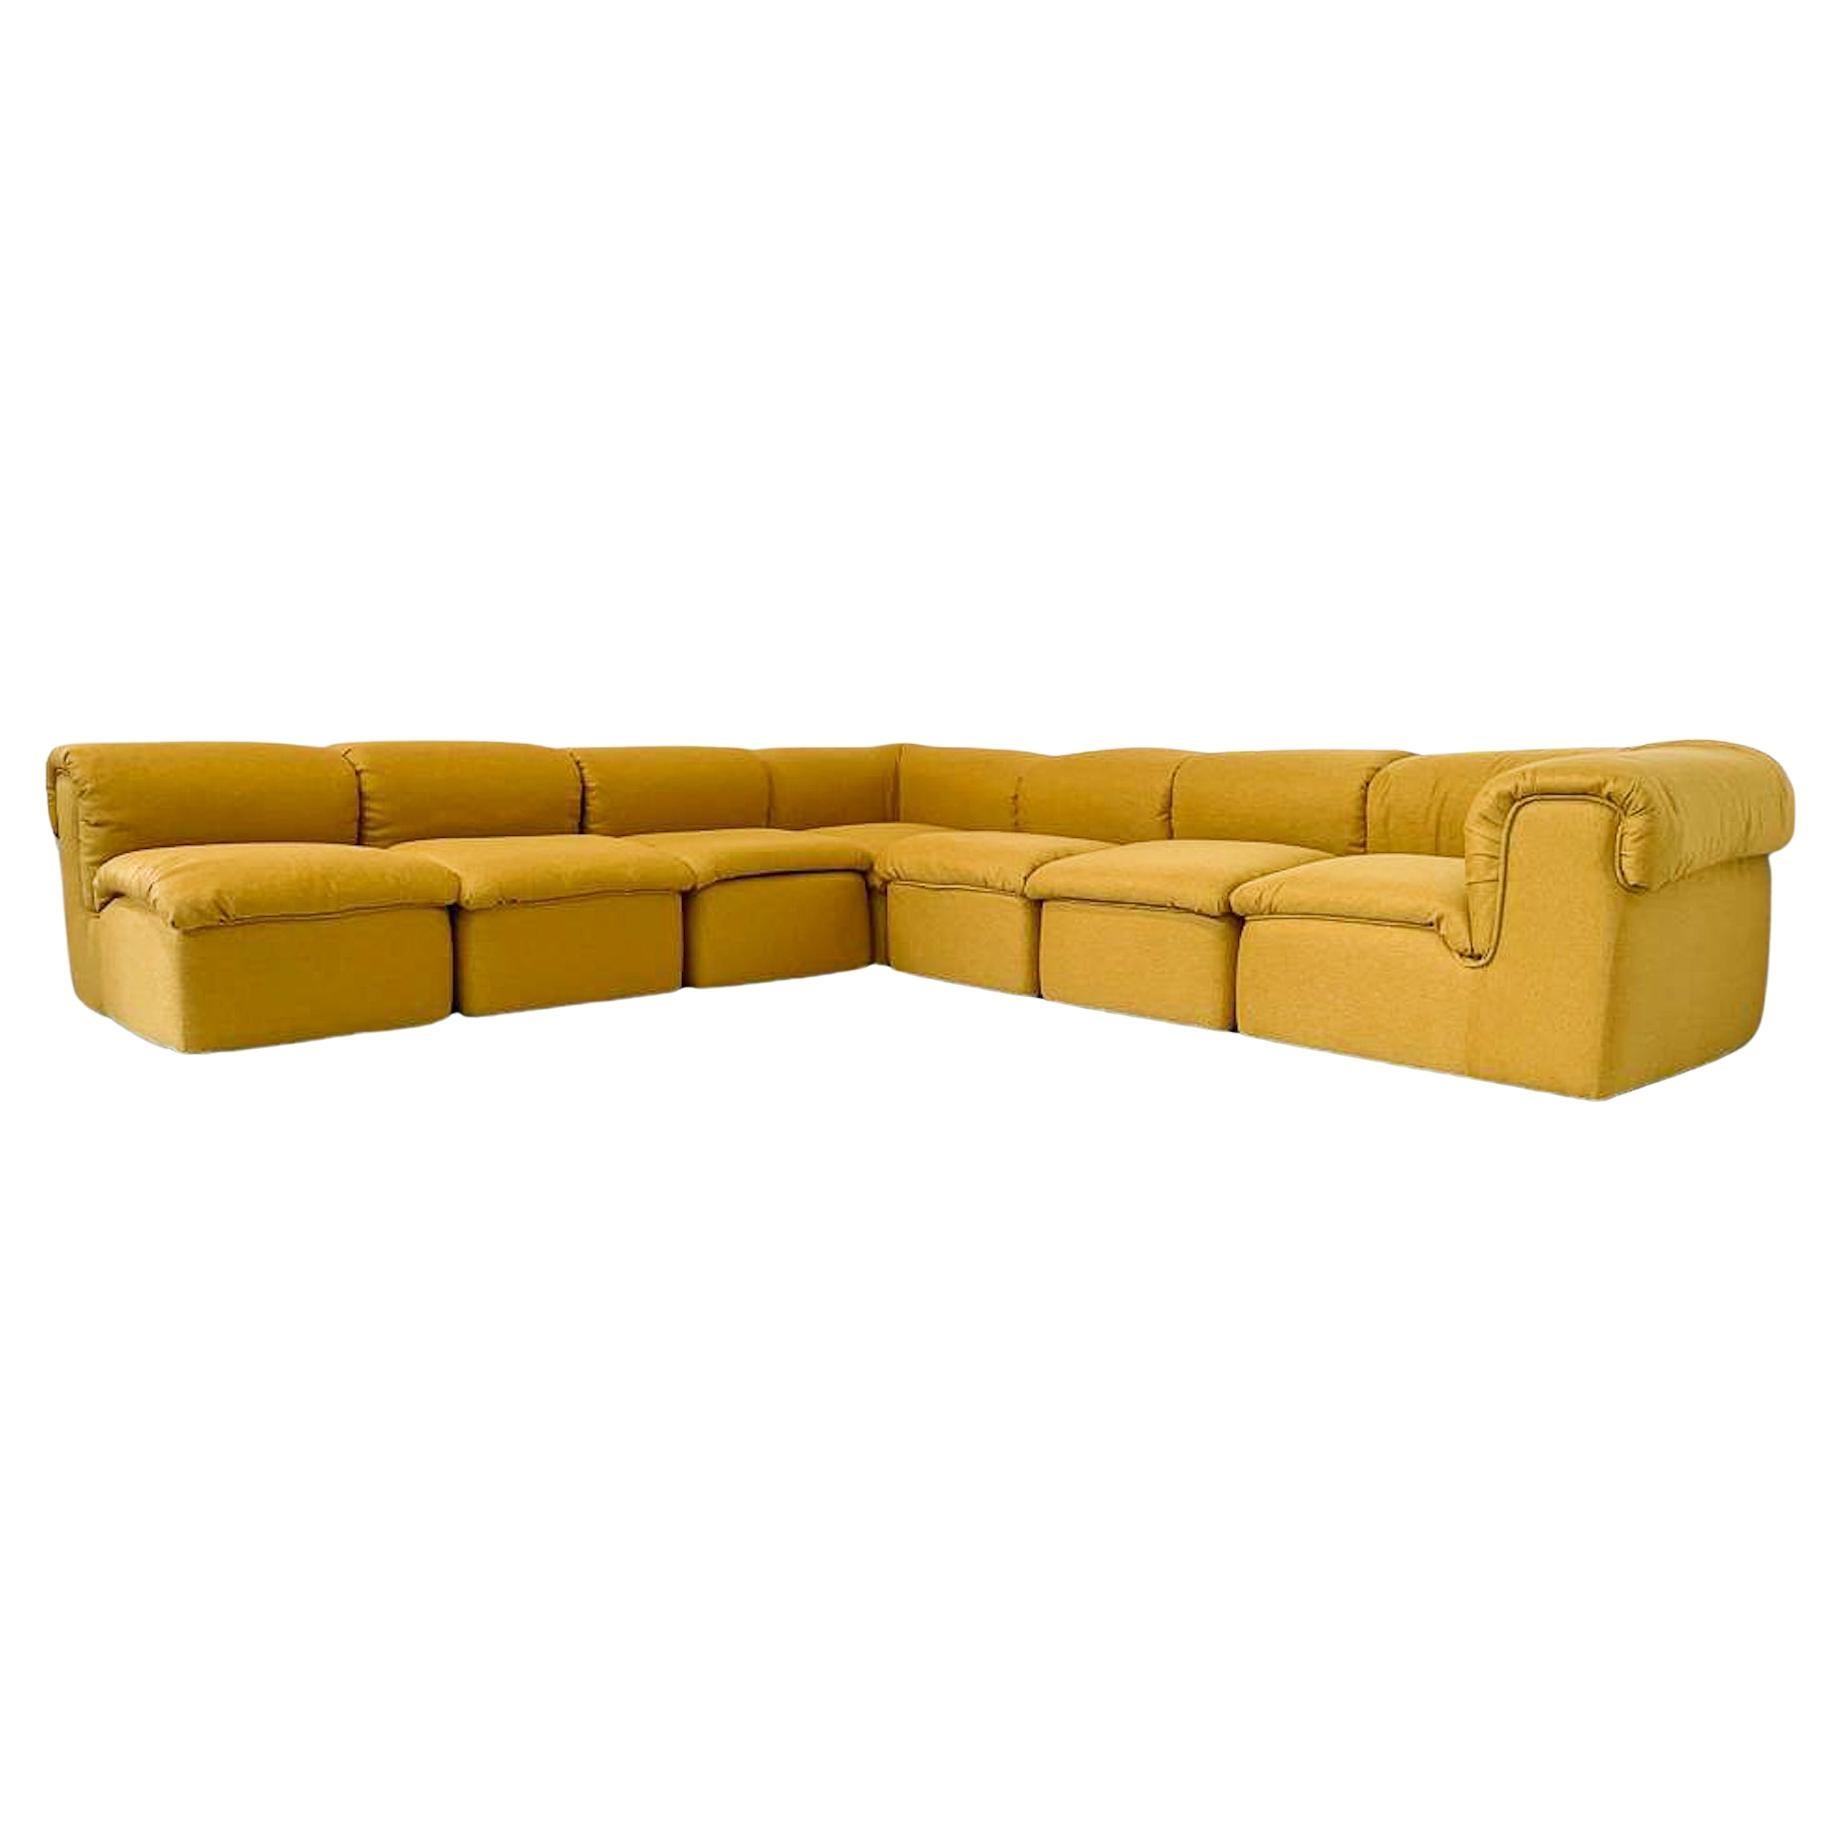 Mid-Century Modern Yellow Modular Sofa, Italy, 1960s - New Upholstery